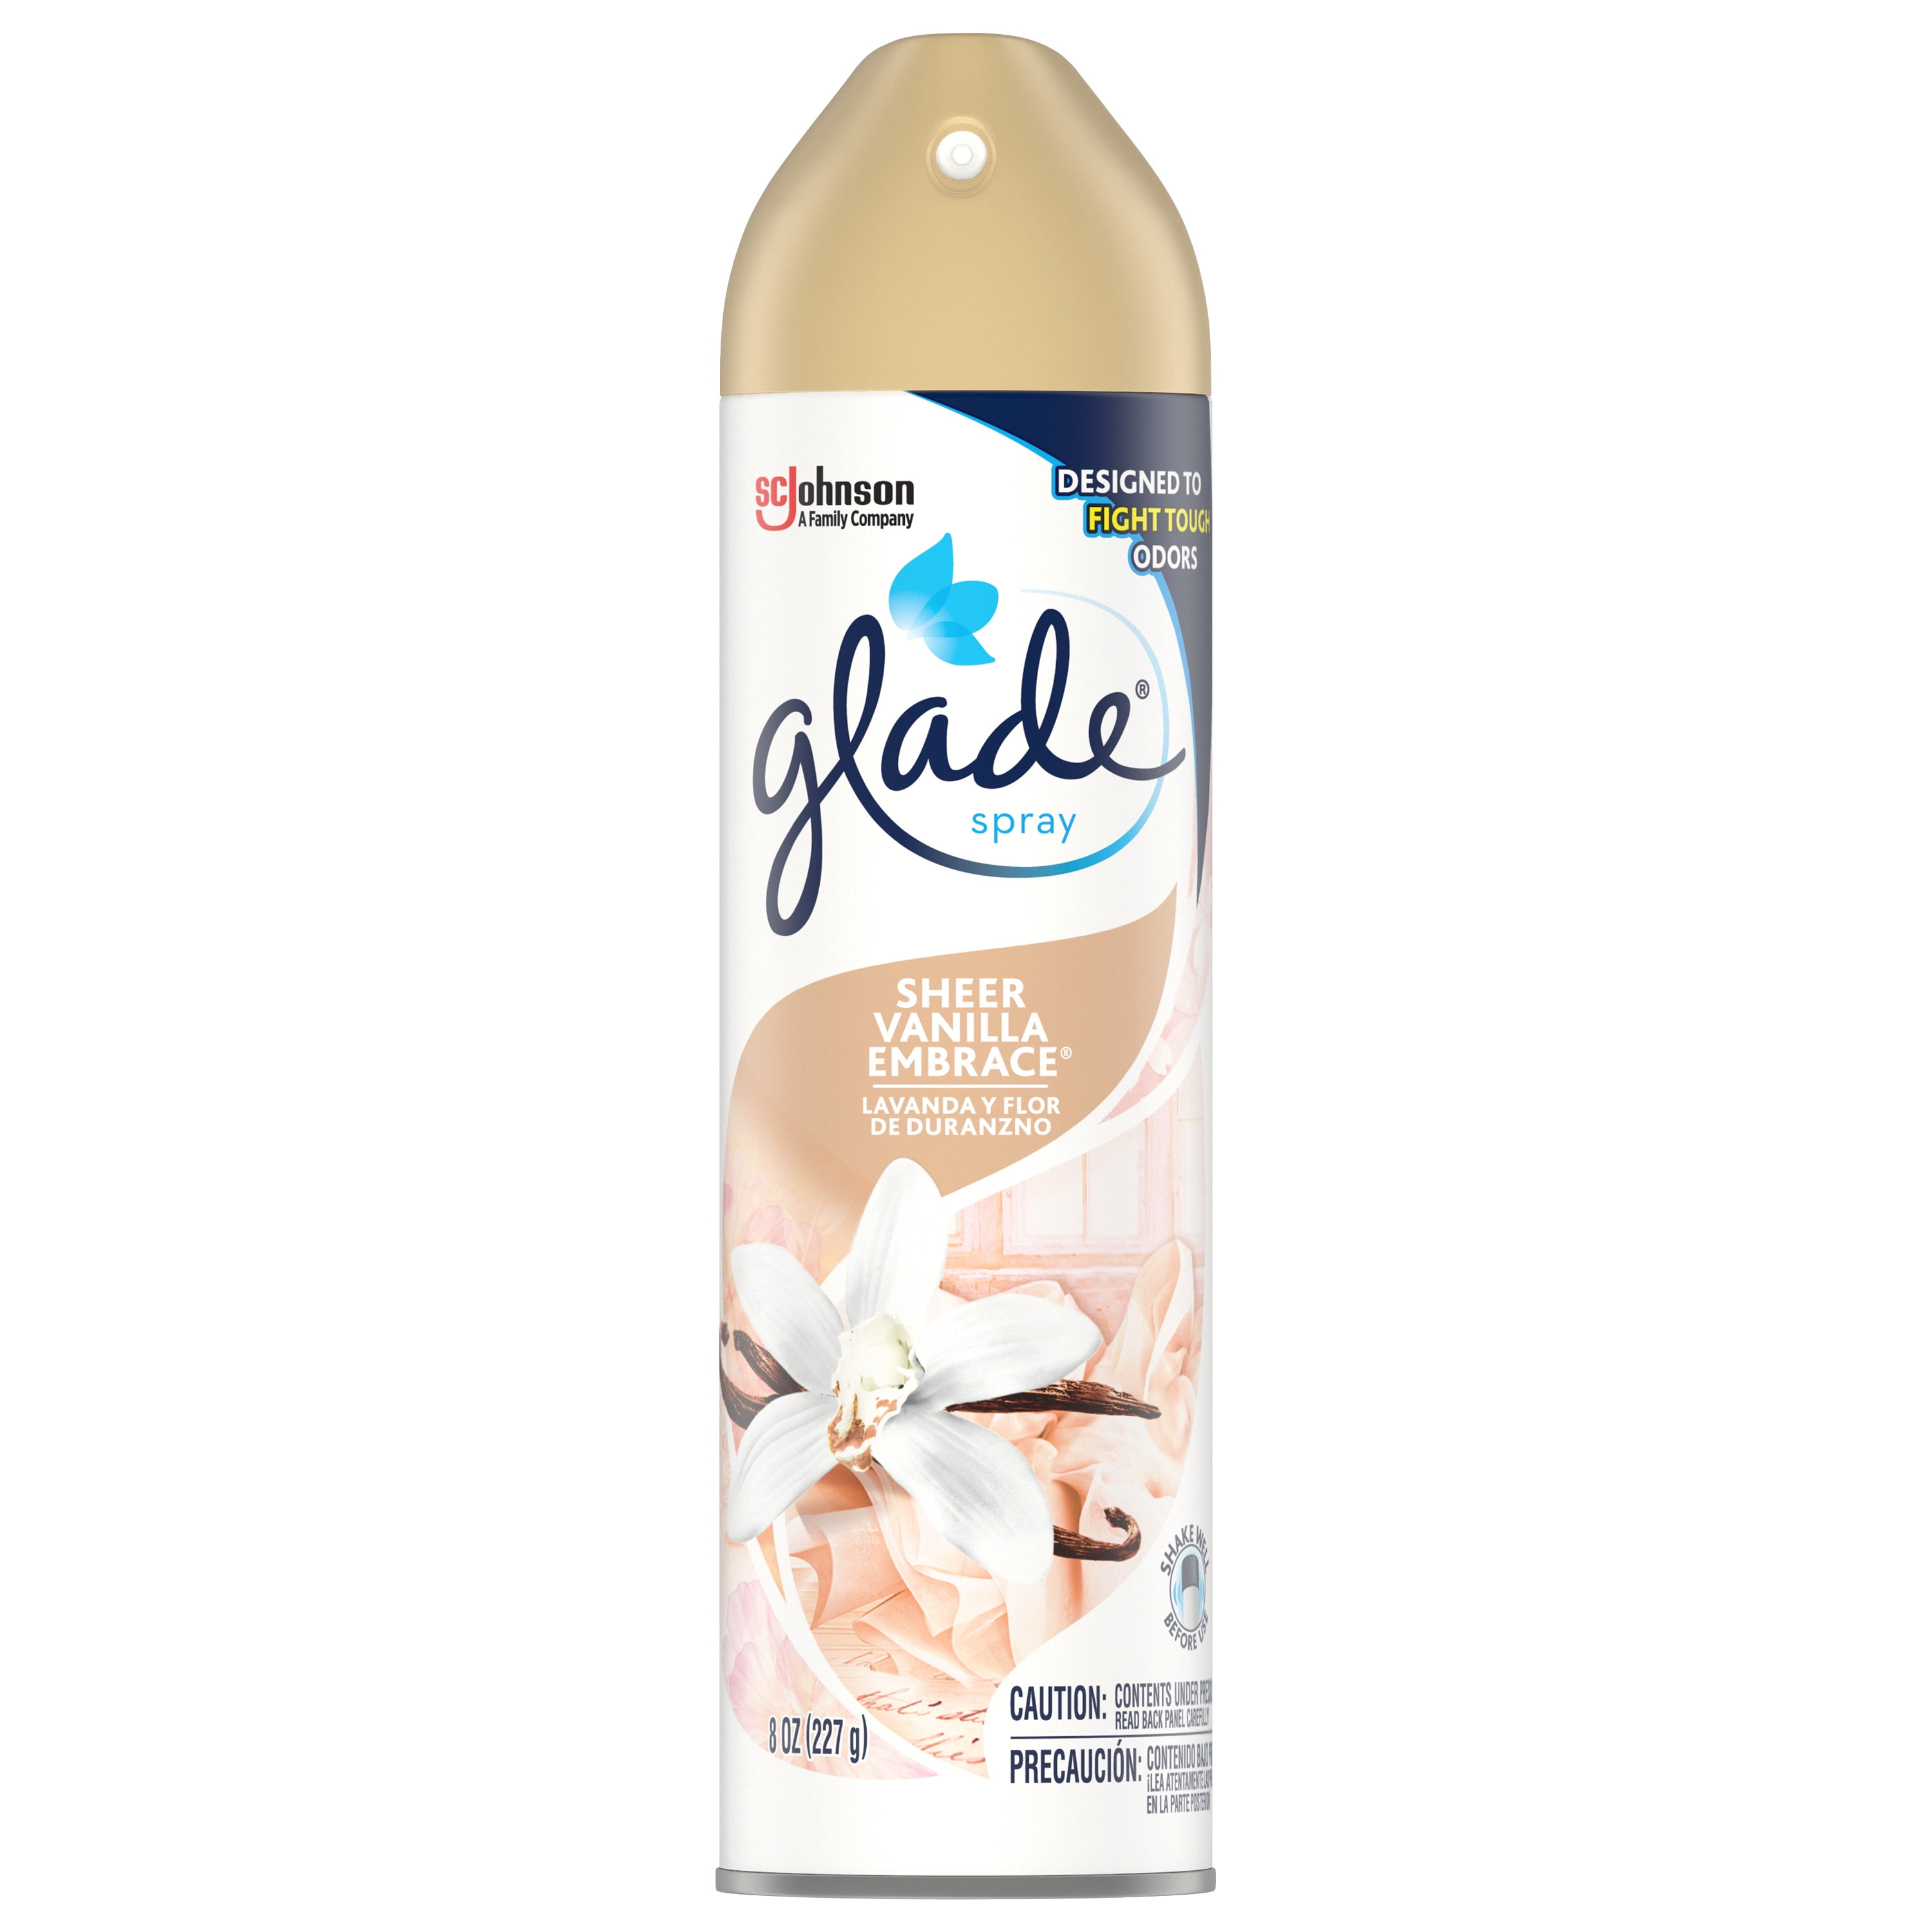 Glade Sheer Vanilla Embrace Room Spray Air Freshener, 8 Ounce 